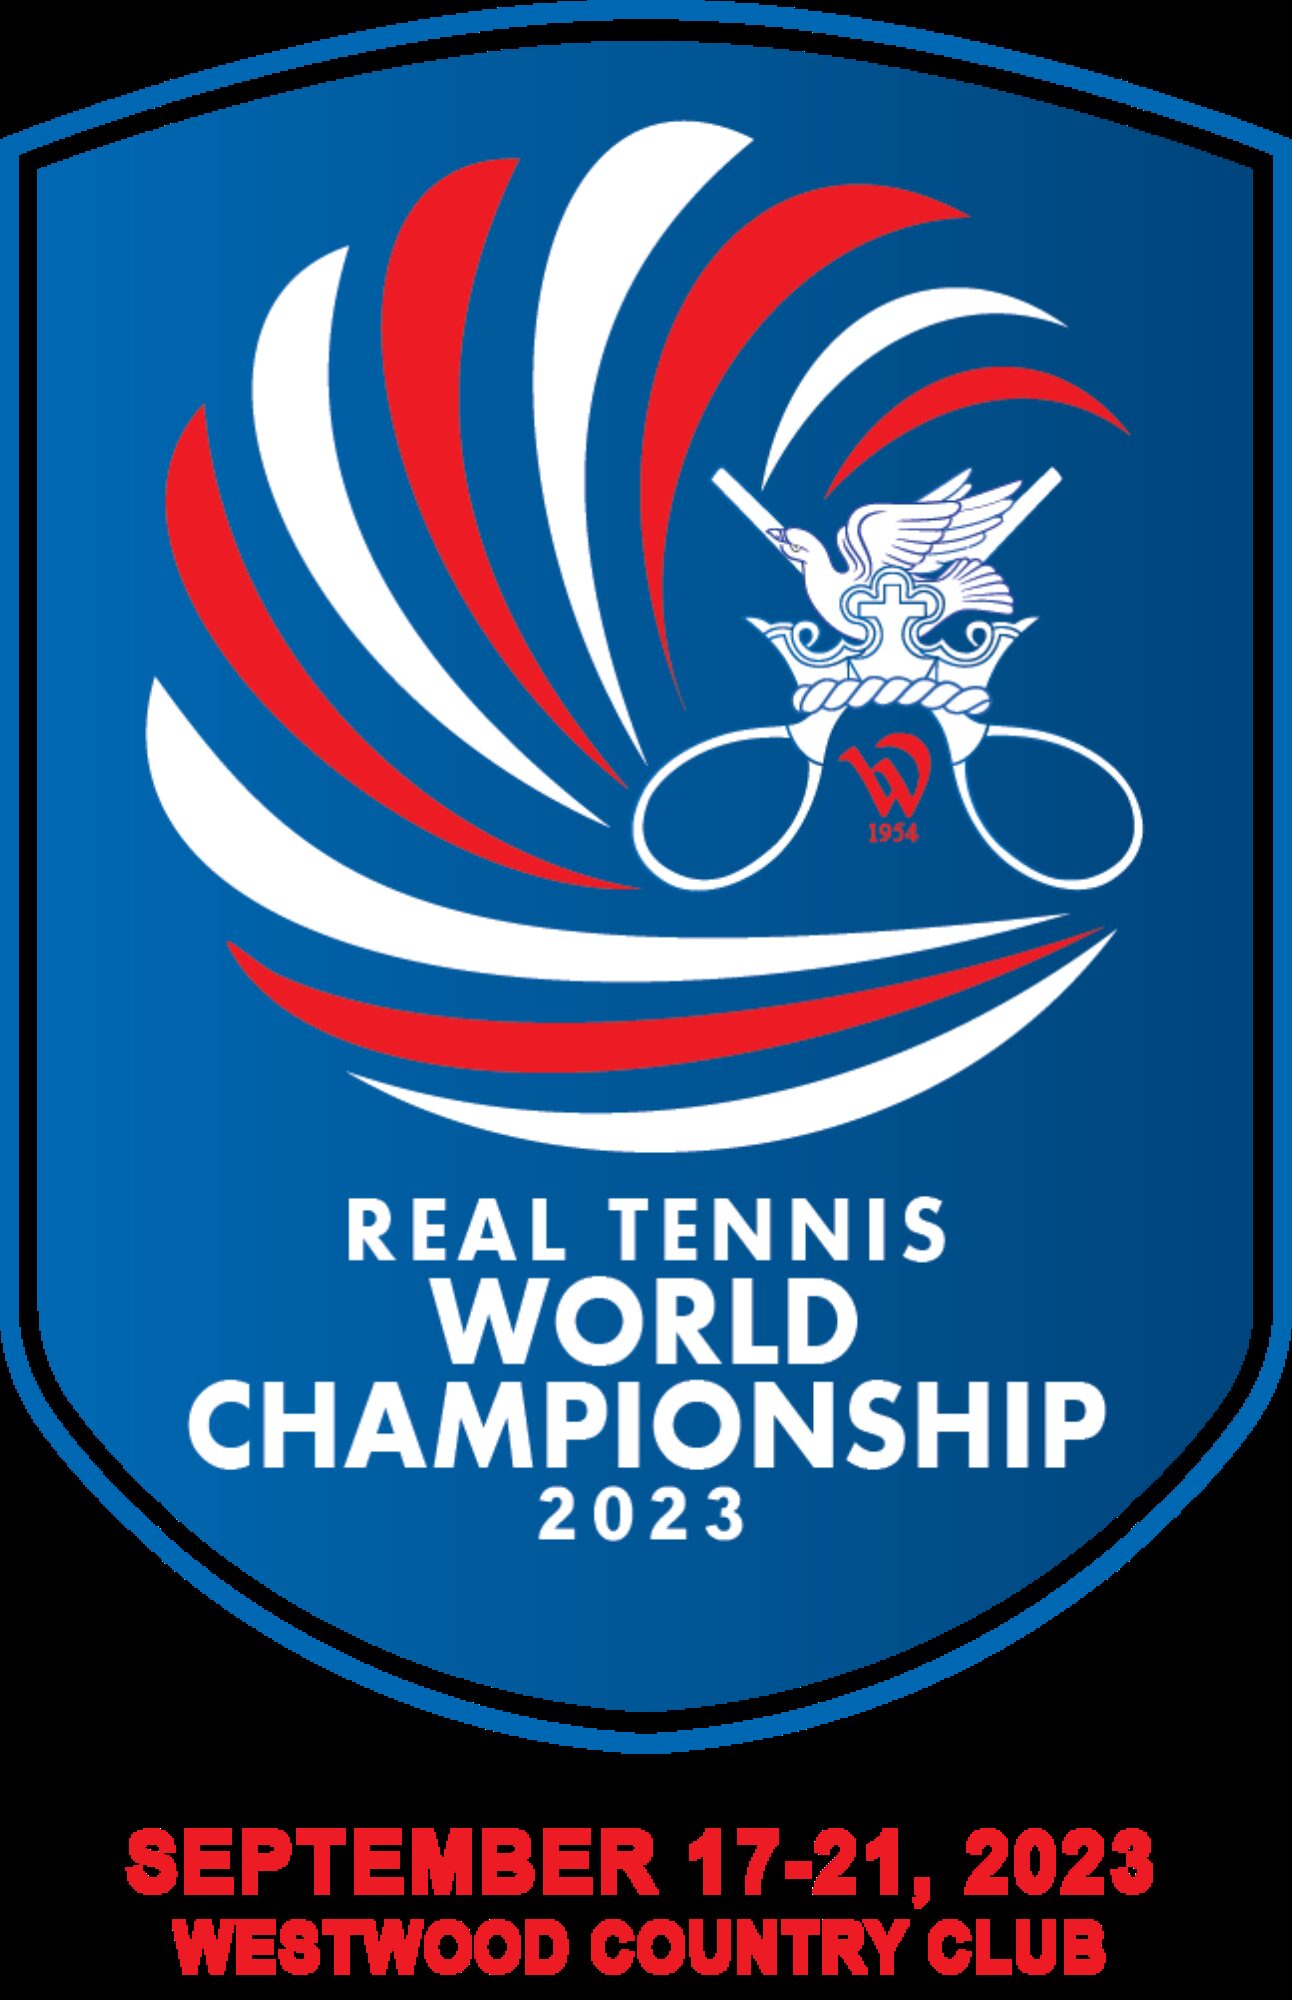 Real Tennis World Championship 2023, …